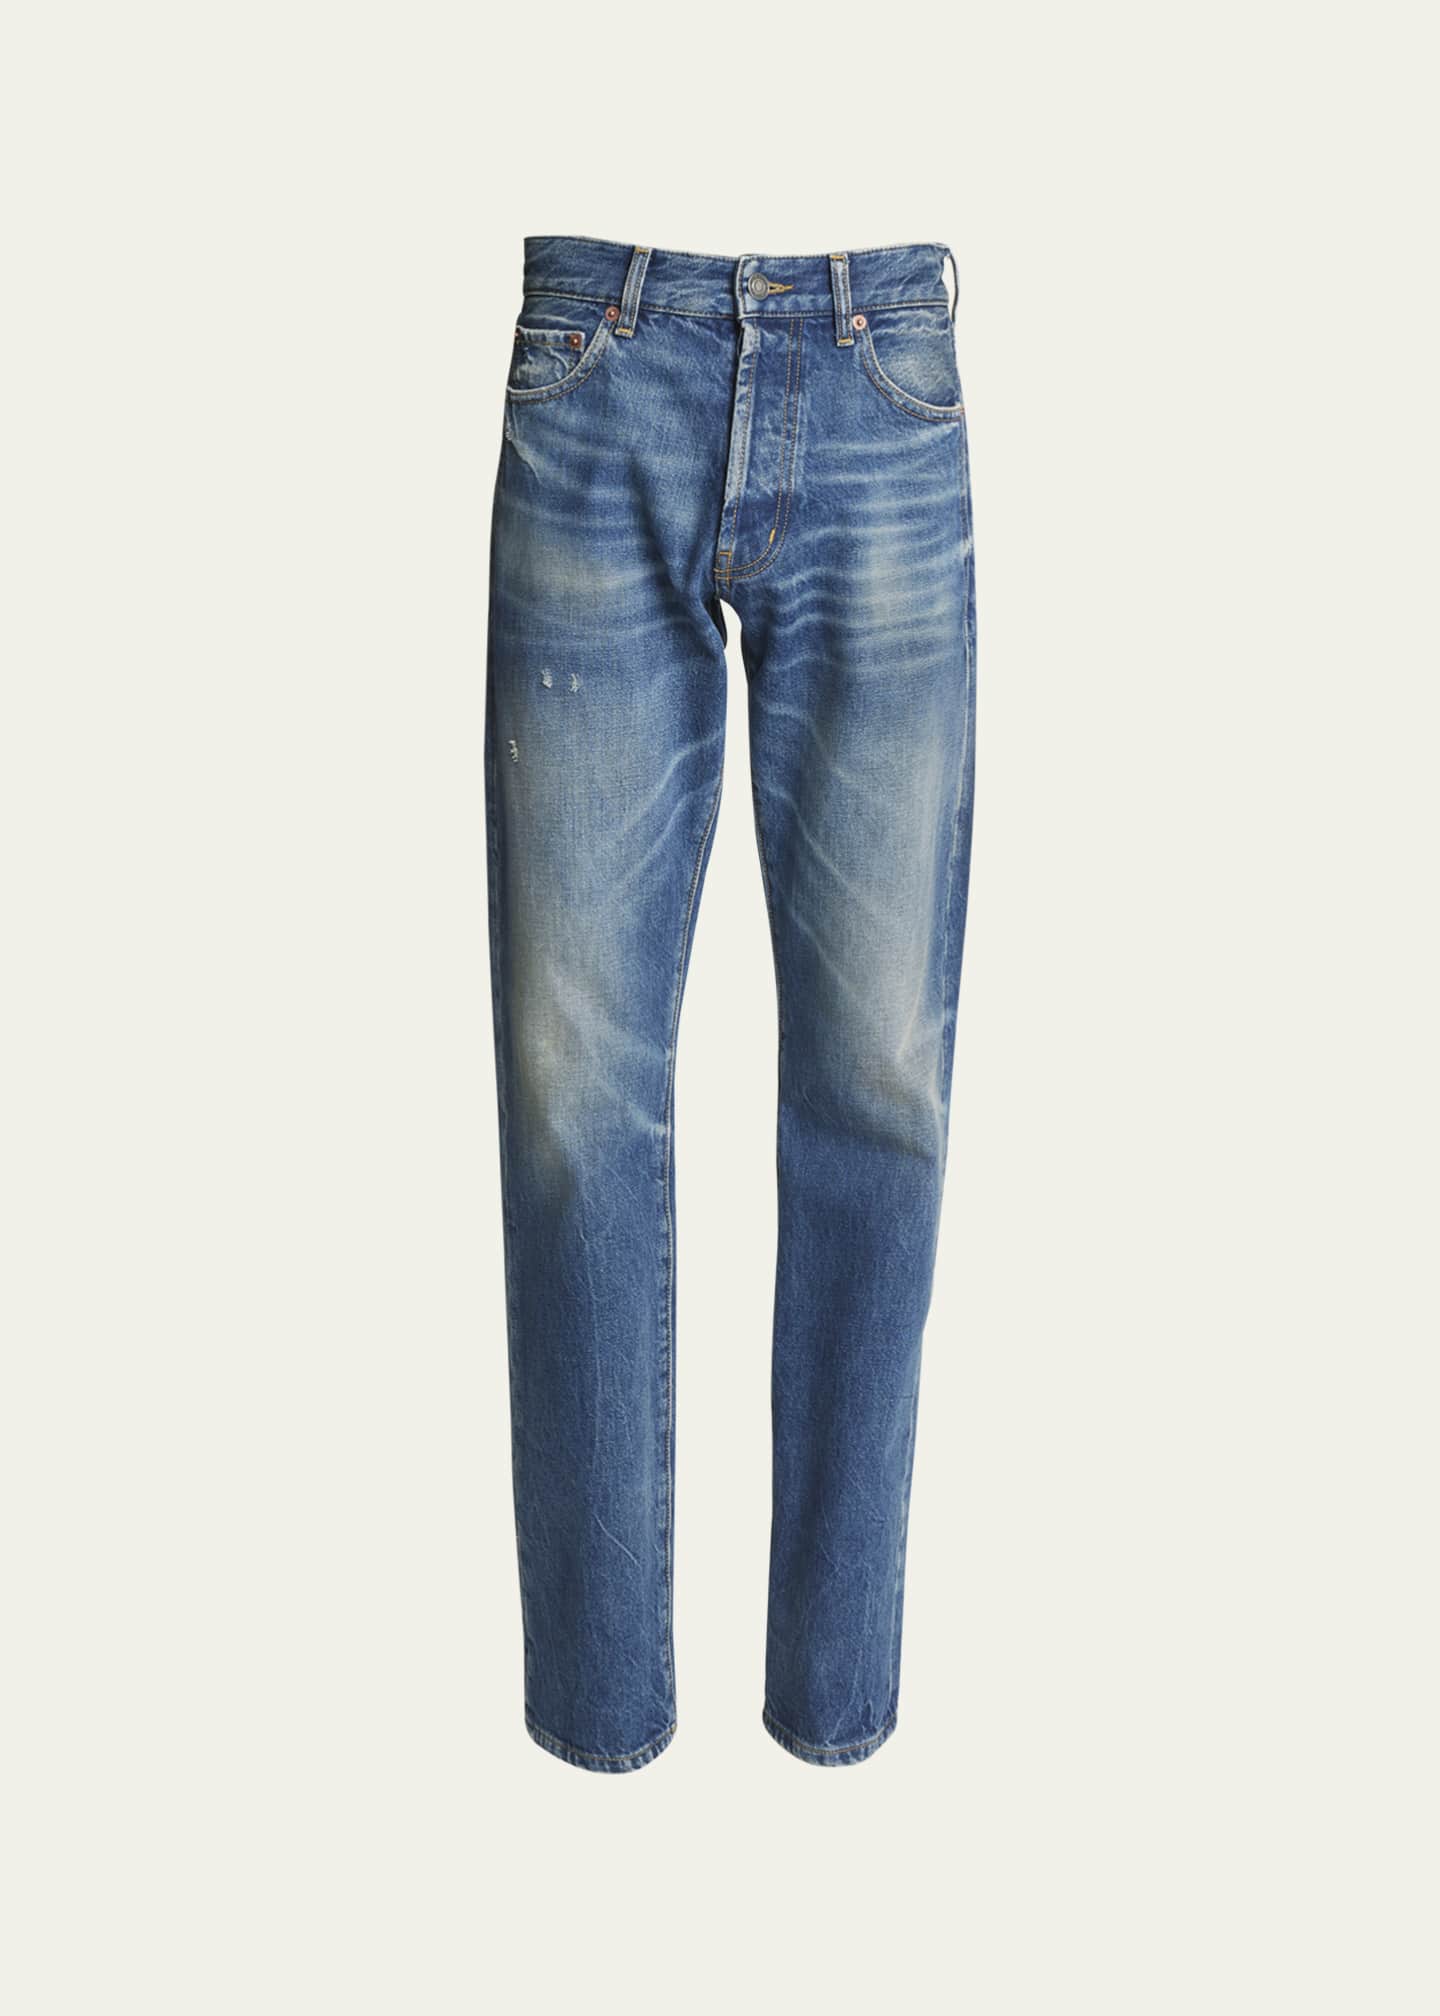 Saint Laurent Men's Stonewashed Straight-Leg Jeans - Bergdorf Goodman